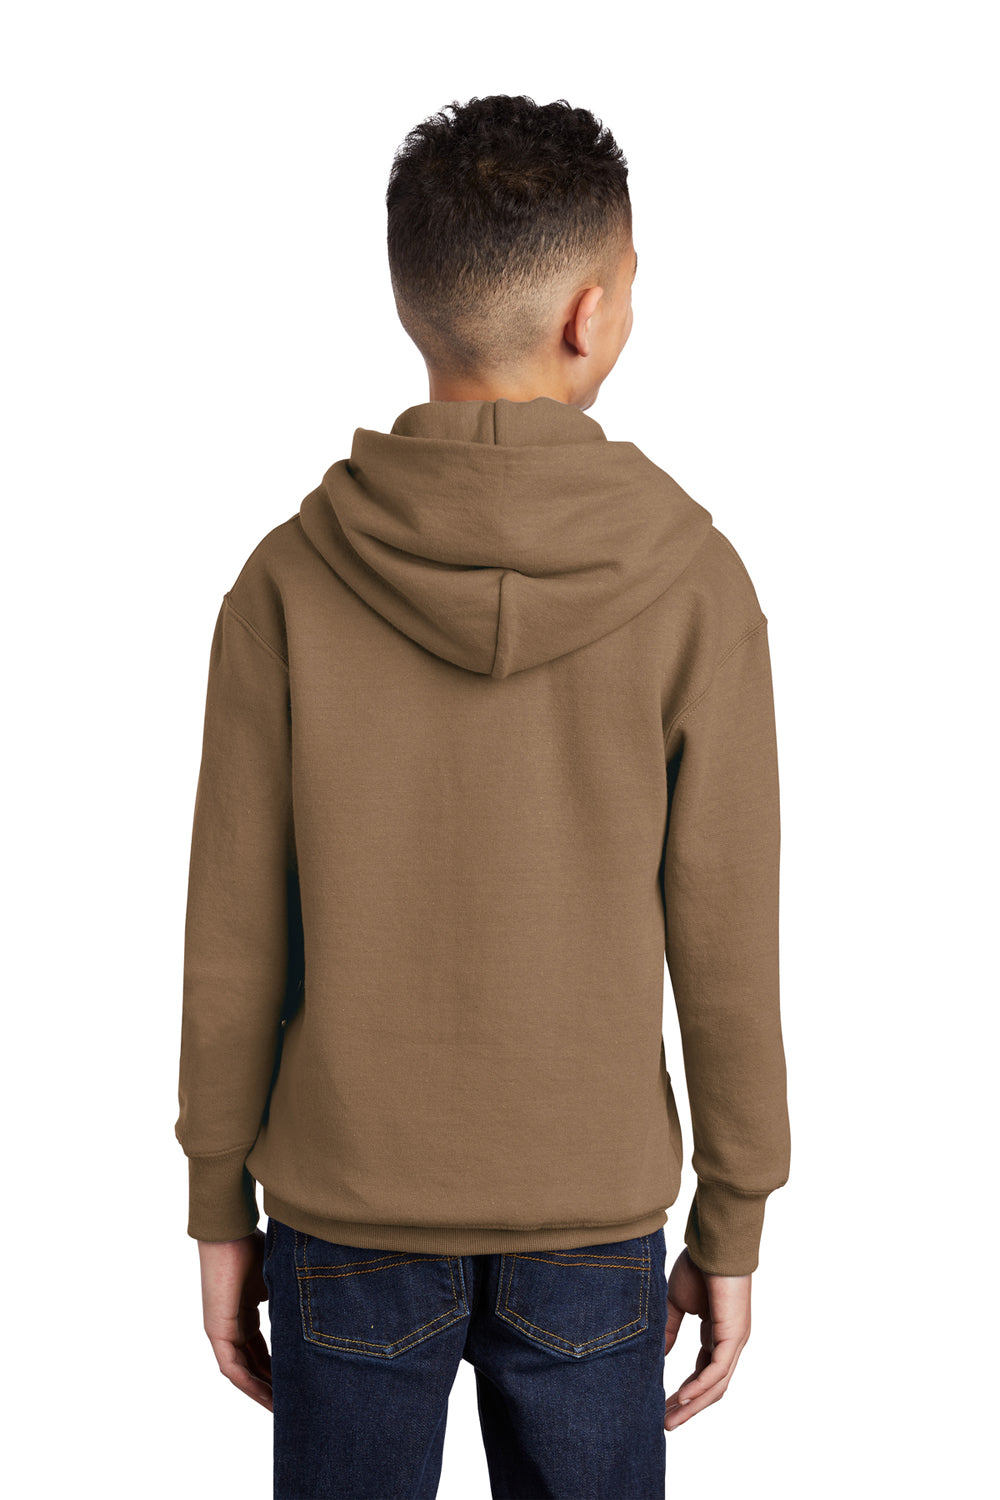 Port & Company PC90YH Youth Core Fleece Hooded Sweatshirt Hoodie Woodland Brown Back